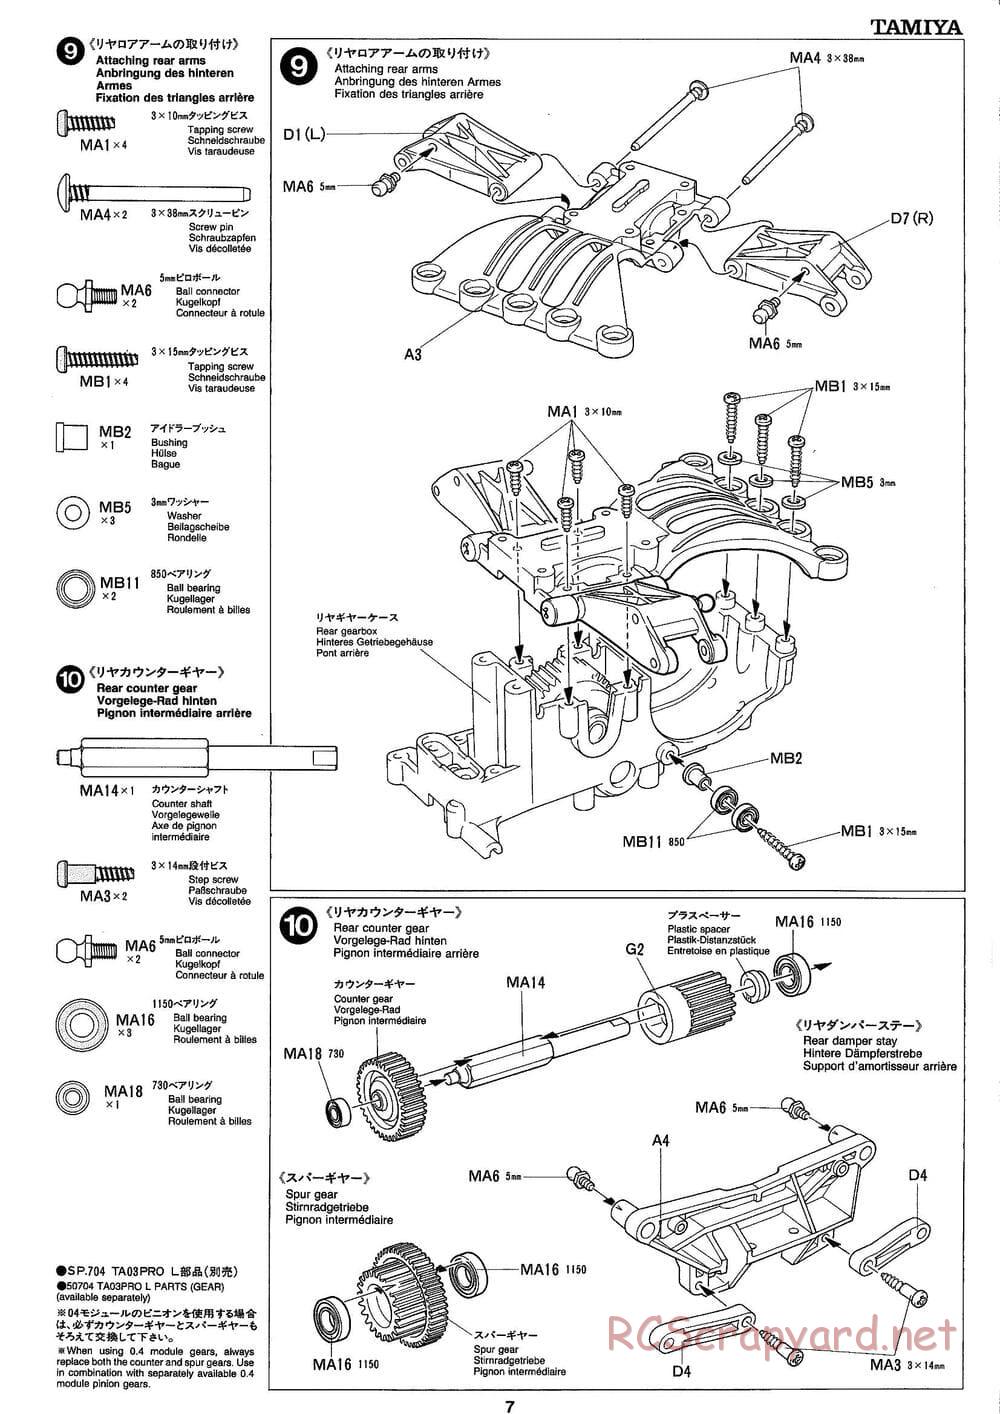 Tamiya - Mobil 1 NSX - TA-03R Chassis - Manual - Page 7